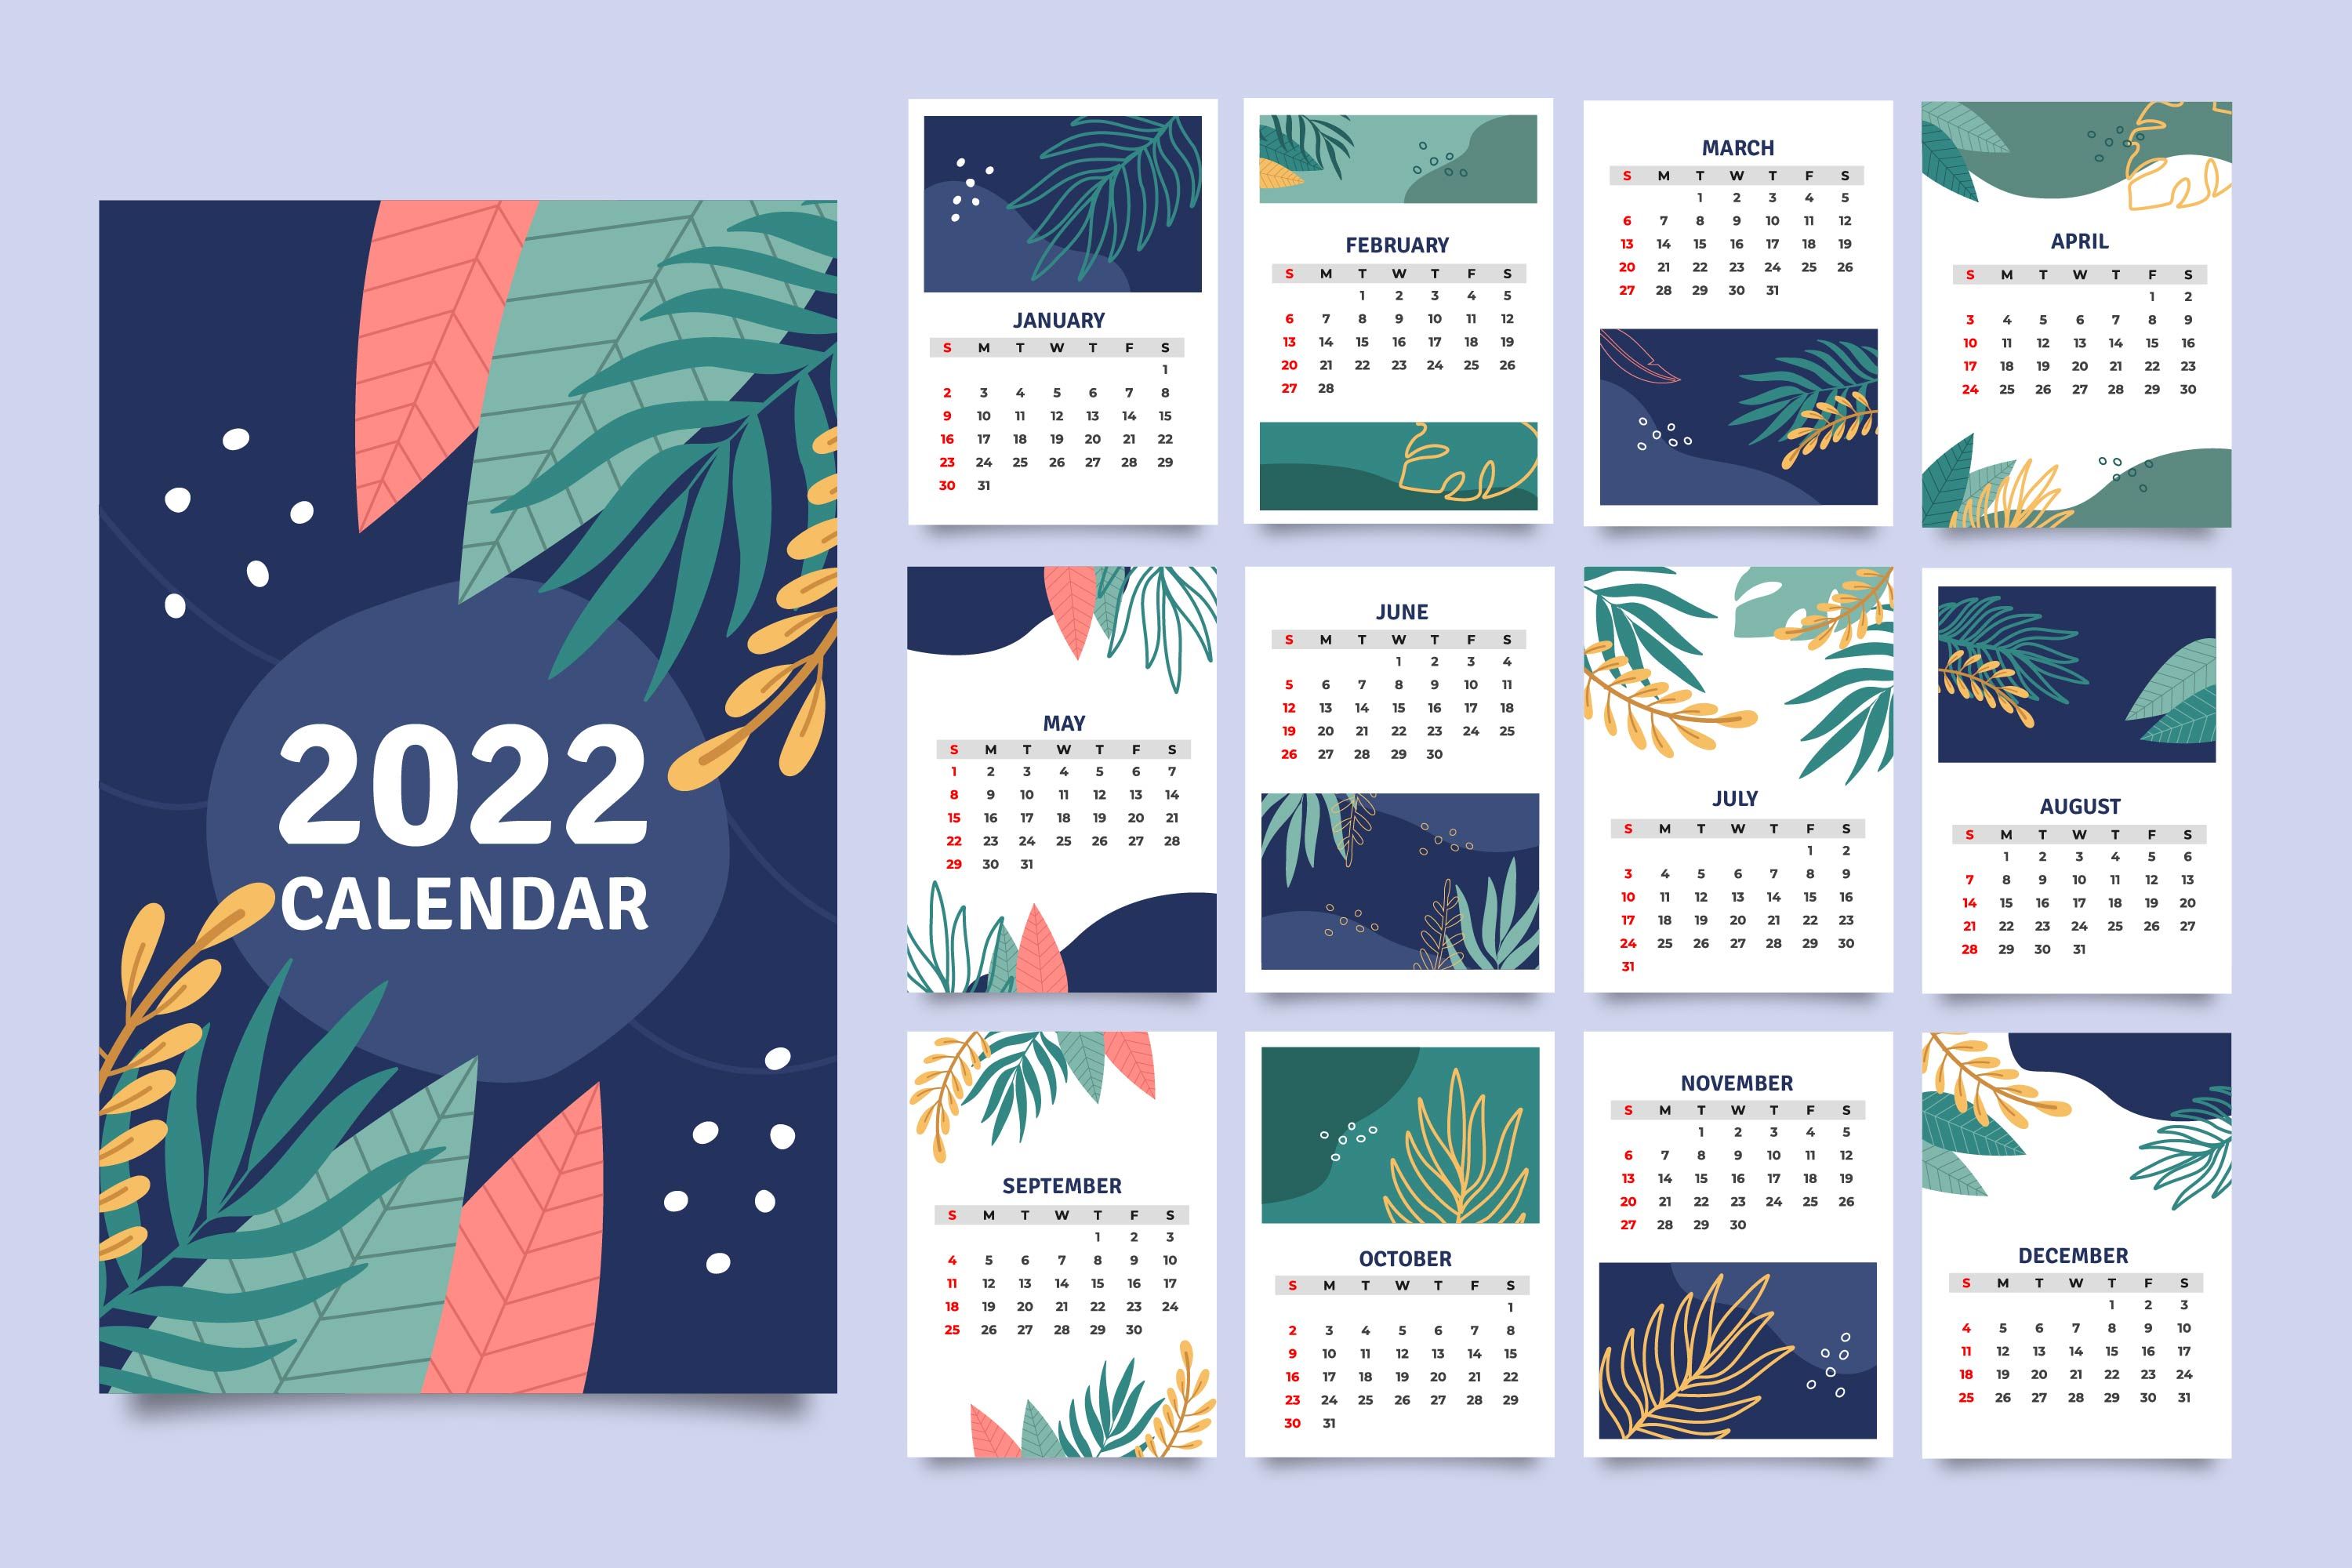 Kalender januari 2022 lengkap jawa